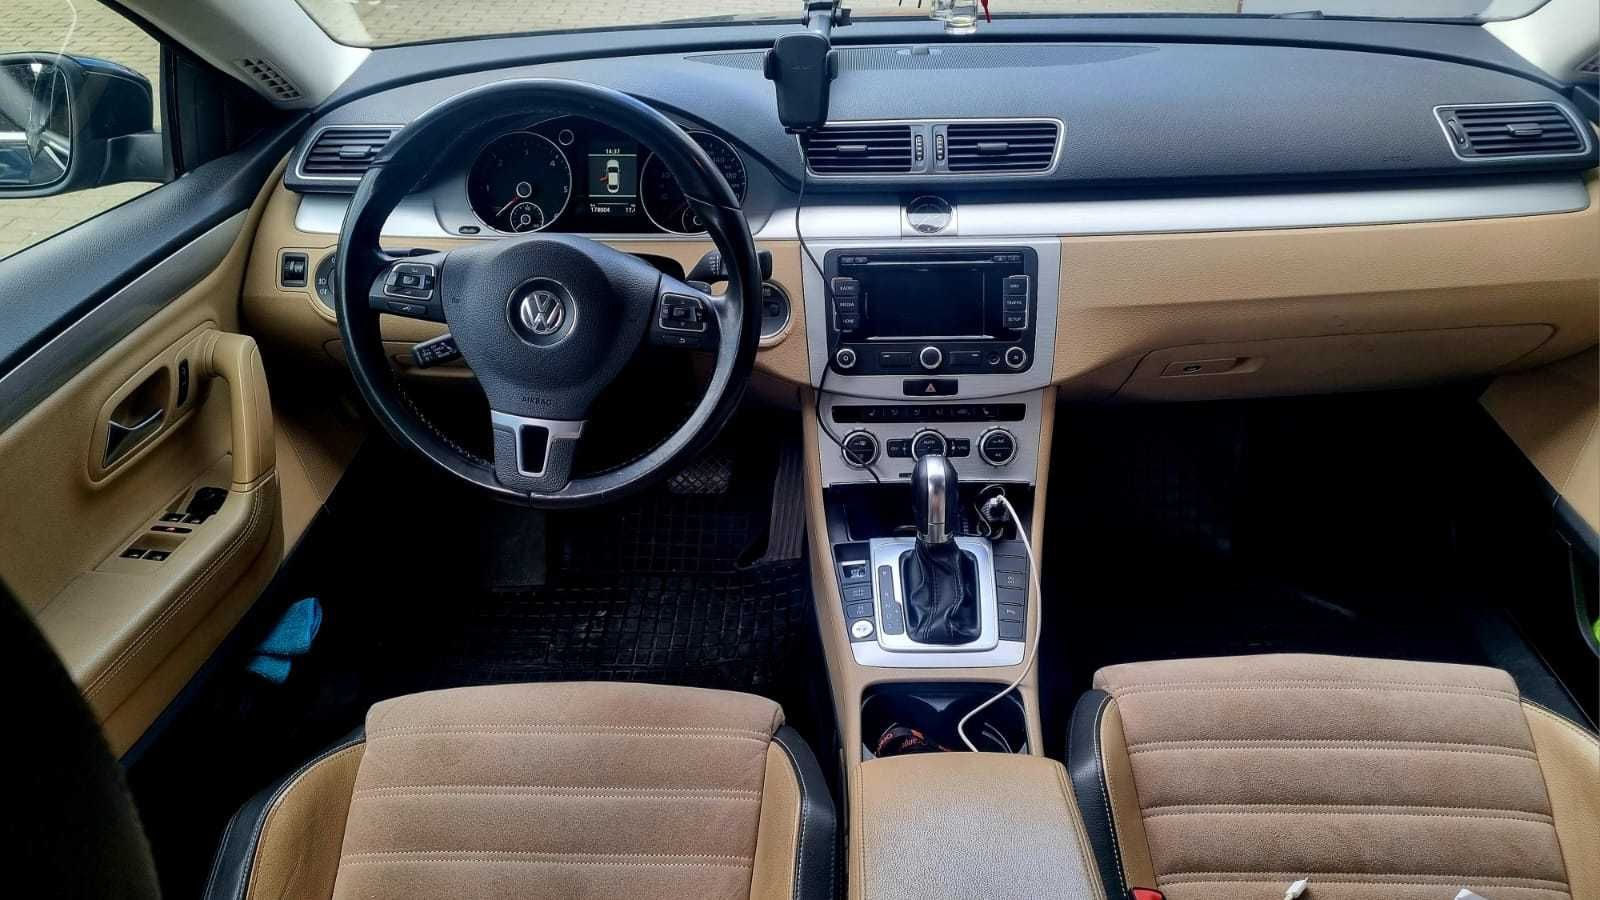 VW Passat cc 2013